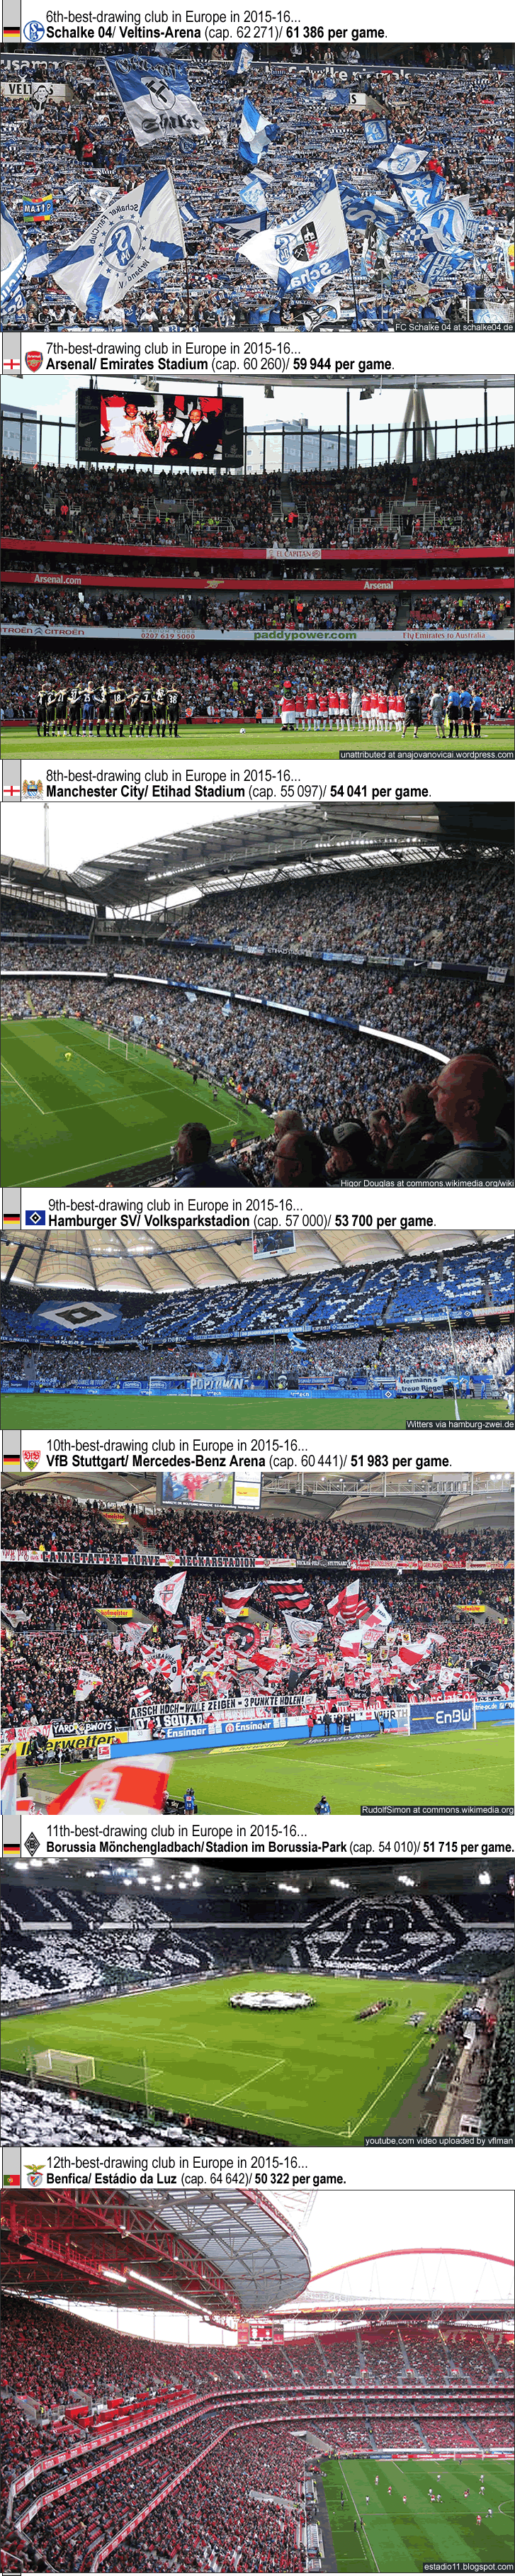 uefa-2016-crowds_stadiums_top-11_6th-to-11_schalke04_arsenal_manchester-city_hamburger-sv_stuttgart_monchengladbach_benfica_e_.gif